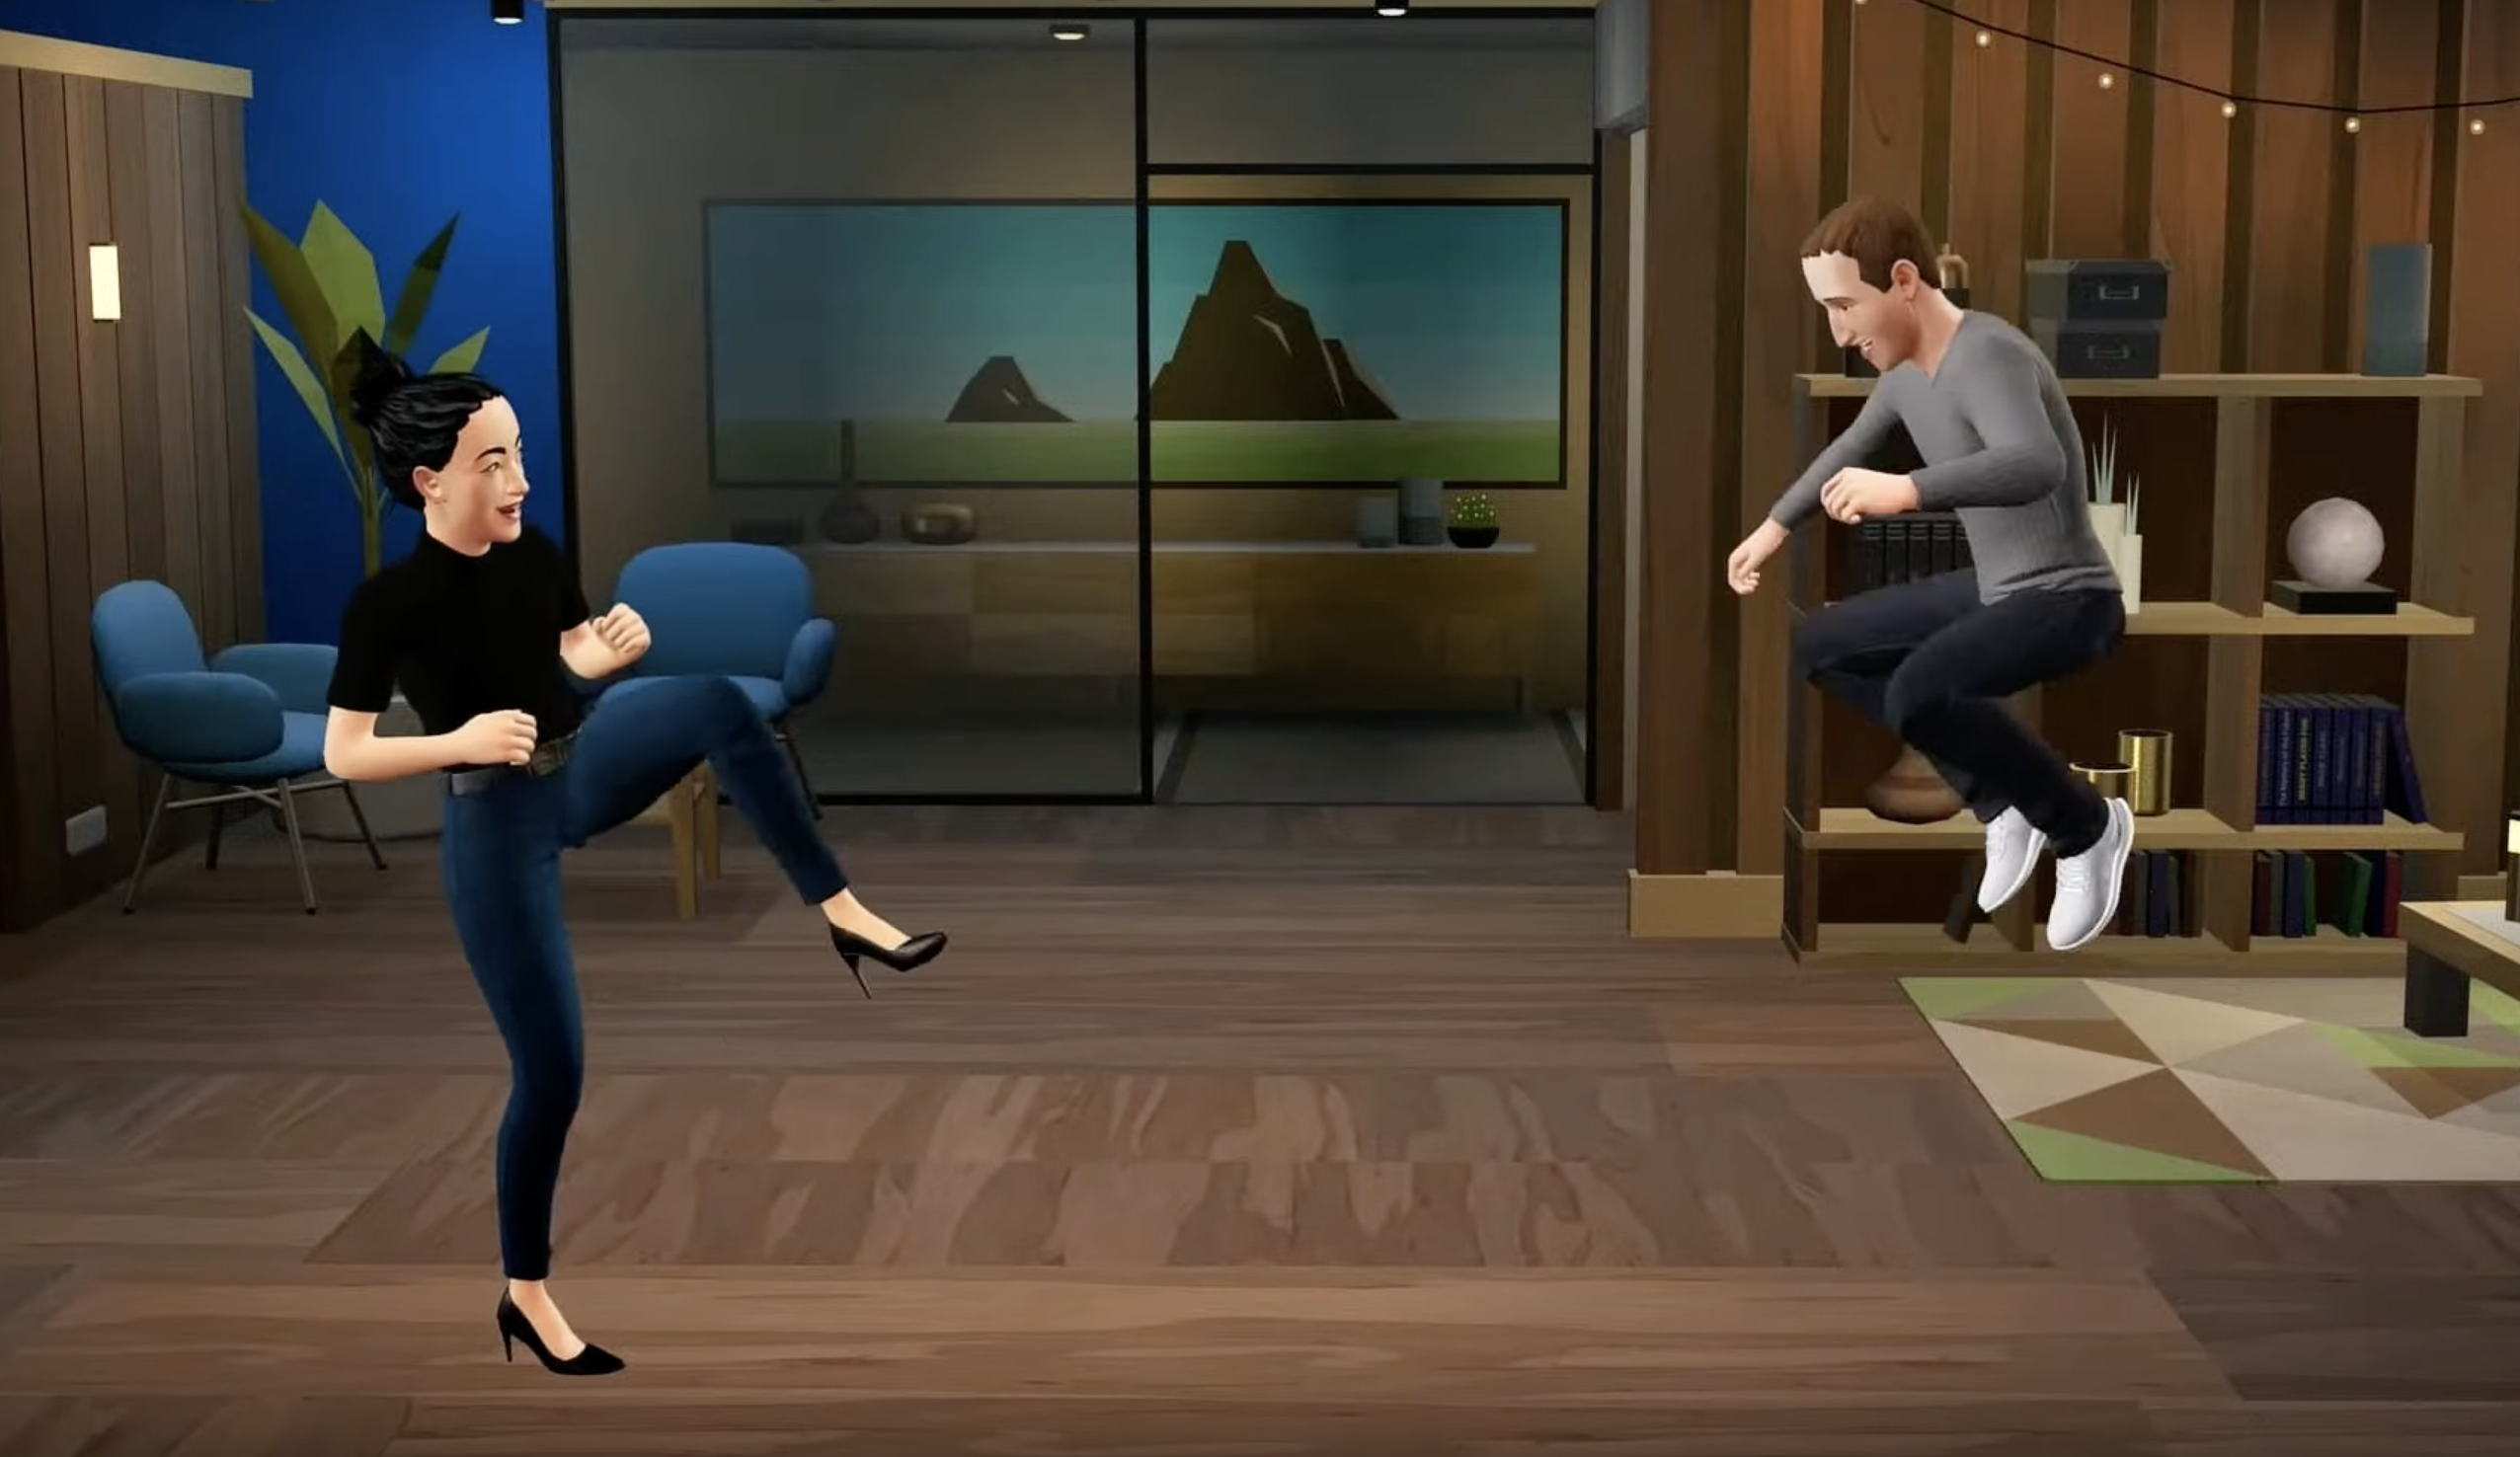 Meta's Horizon Worlds avatars celebrate the use of their legs in virtual reality